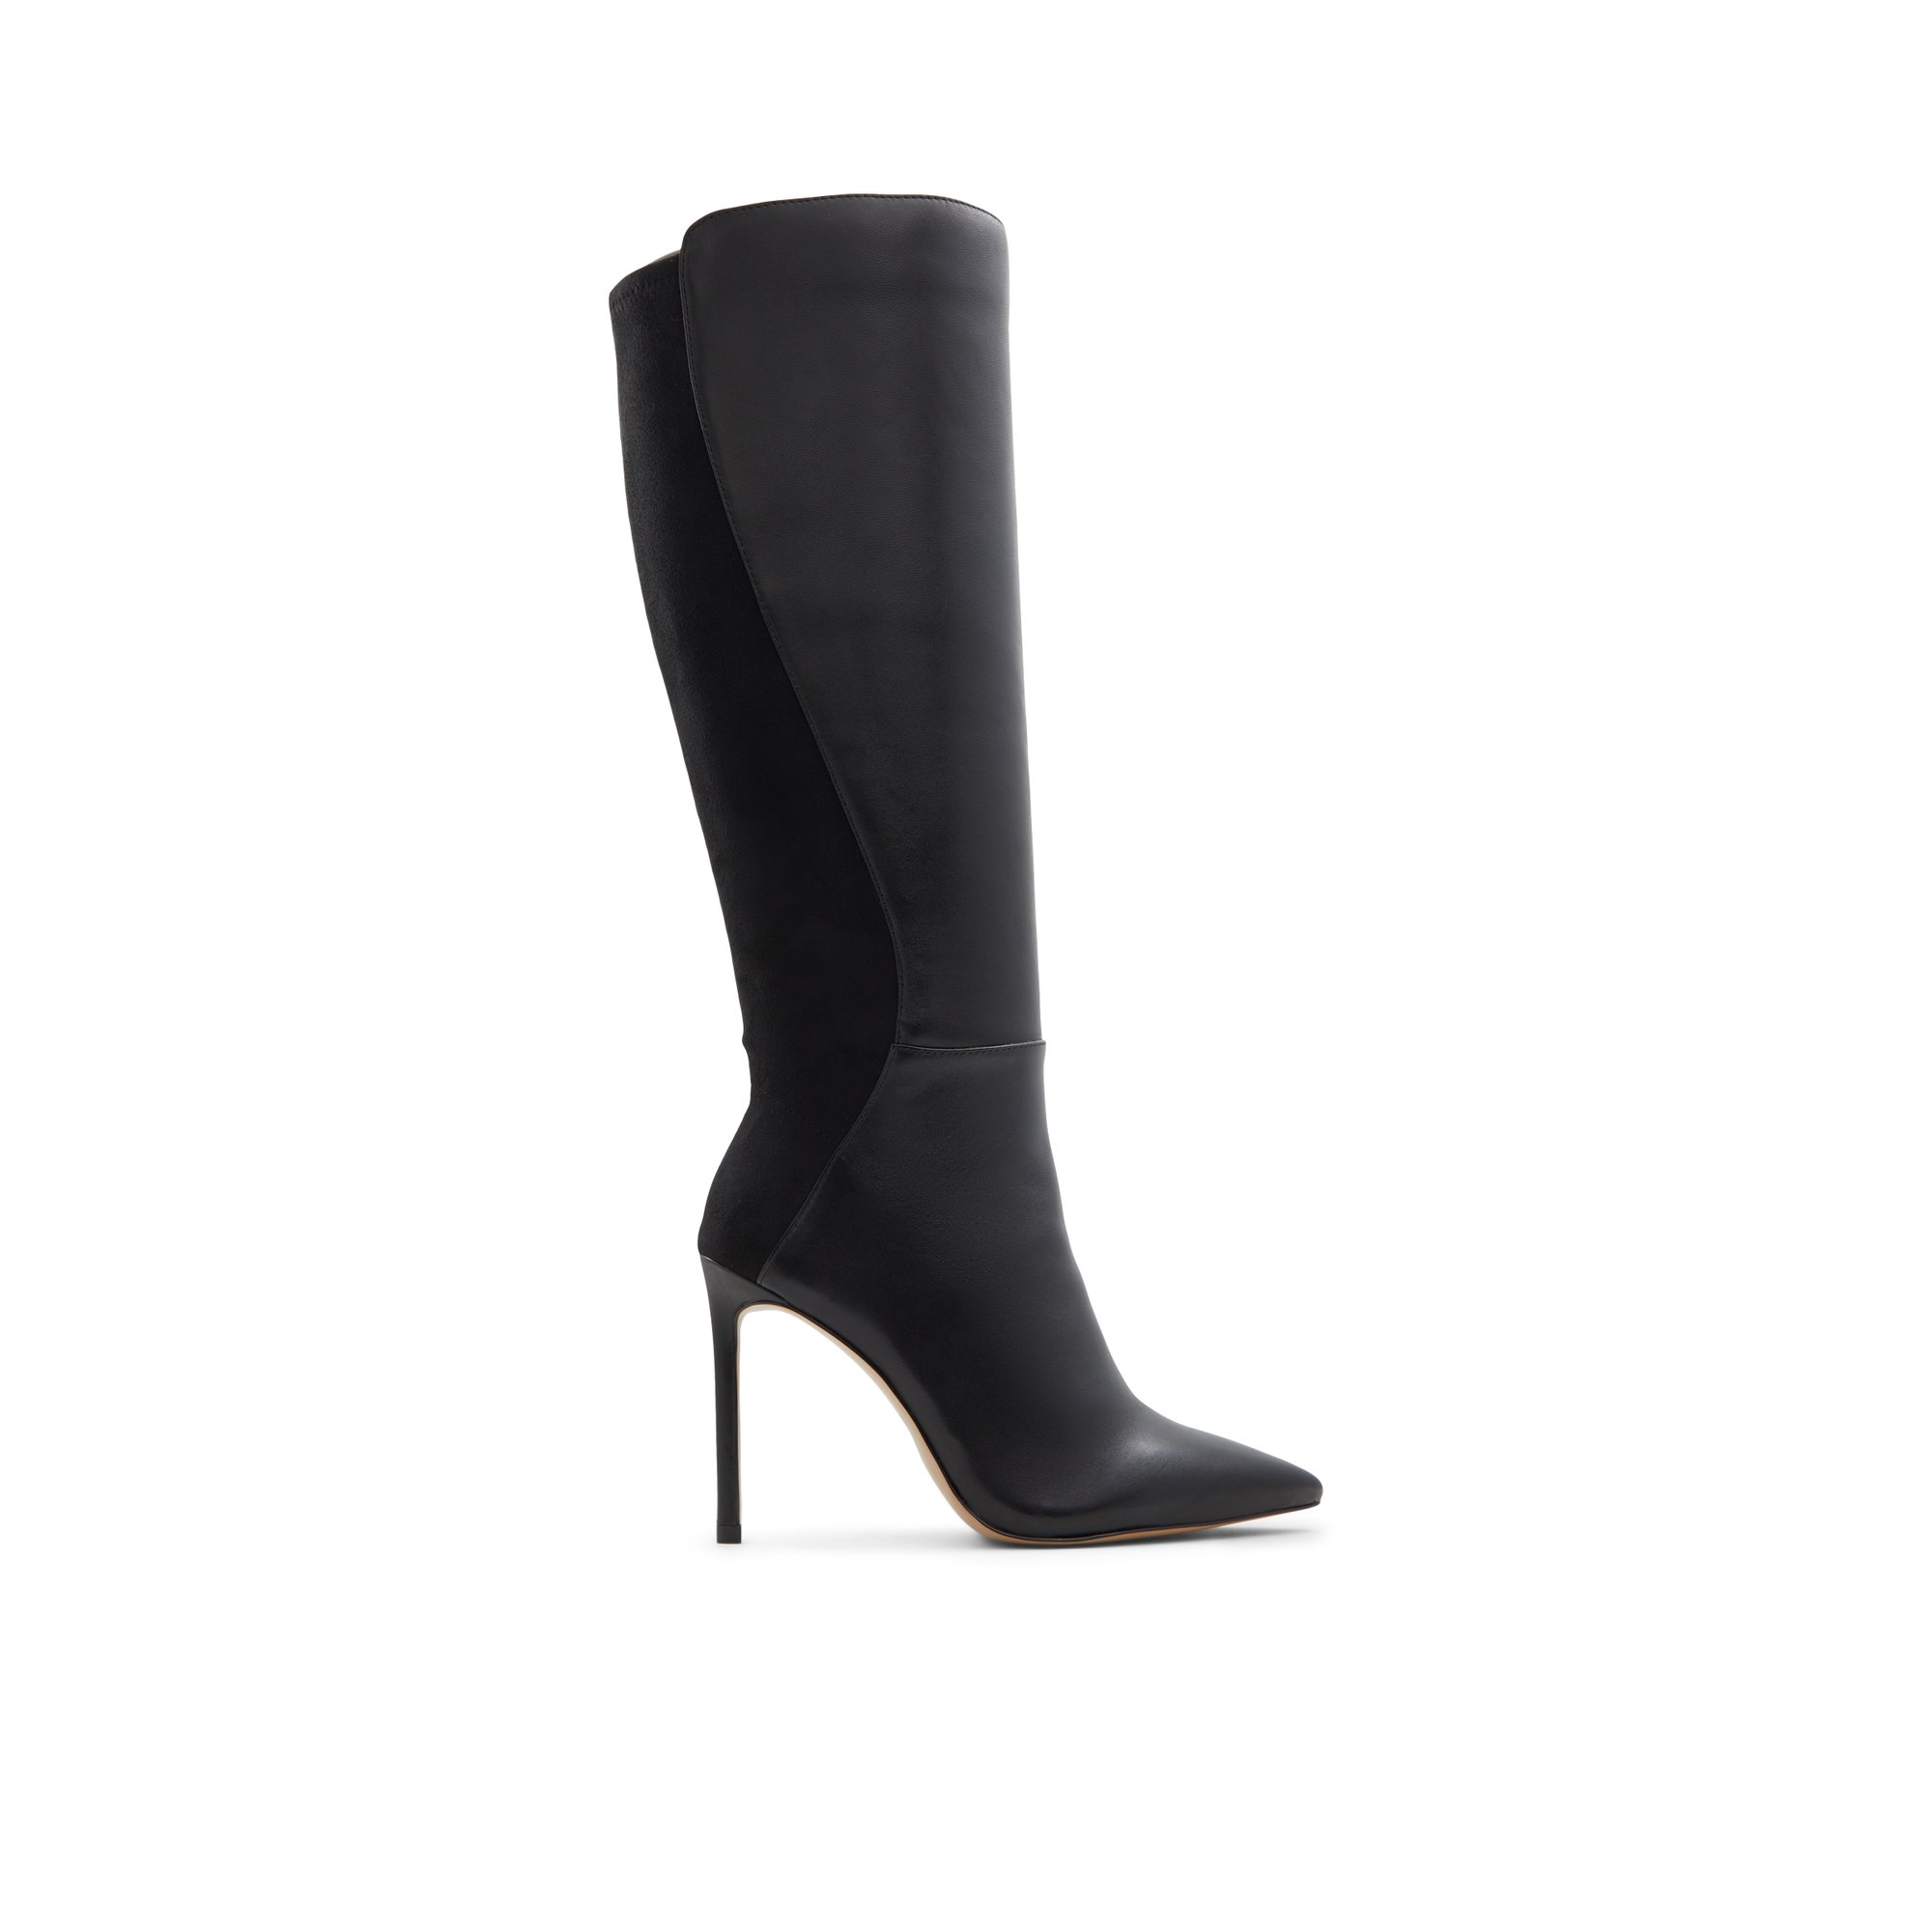 ALDO Milann - Women's Dress Boot - Black